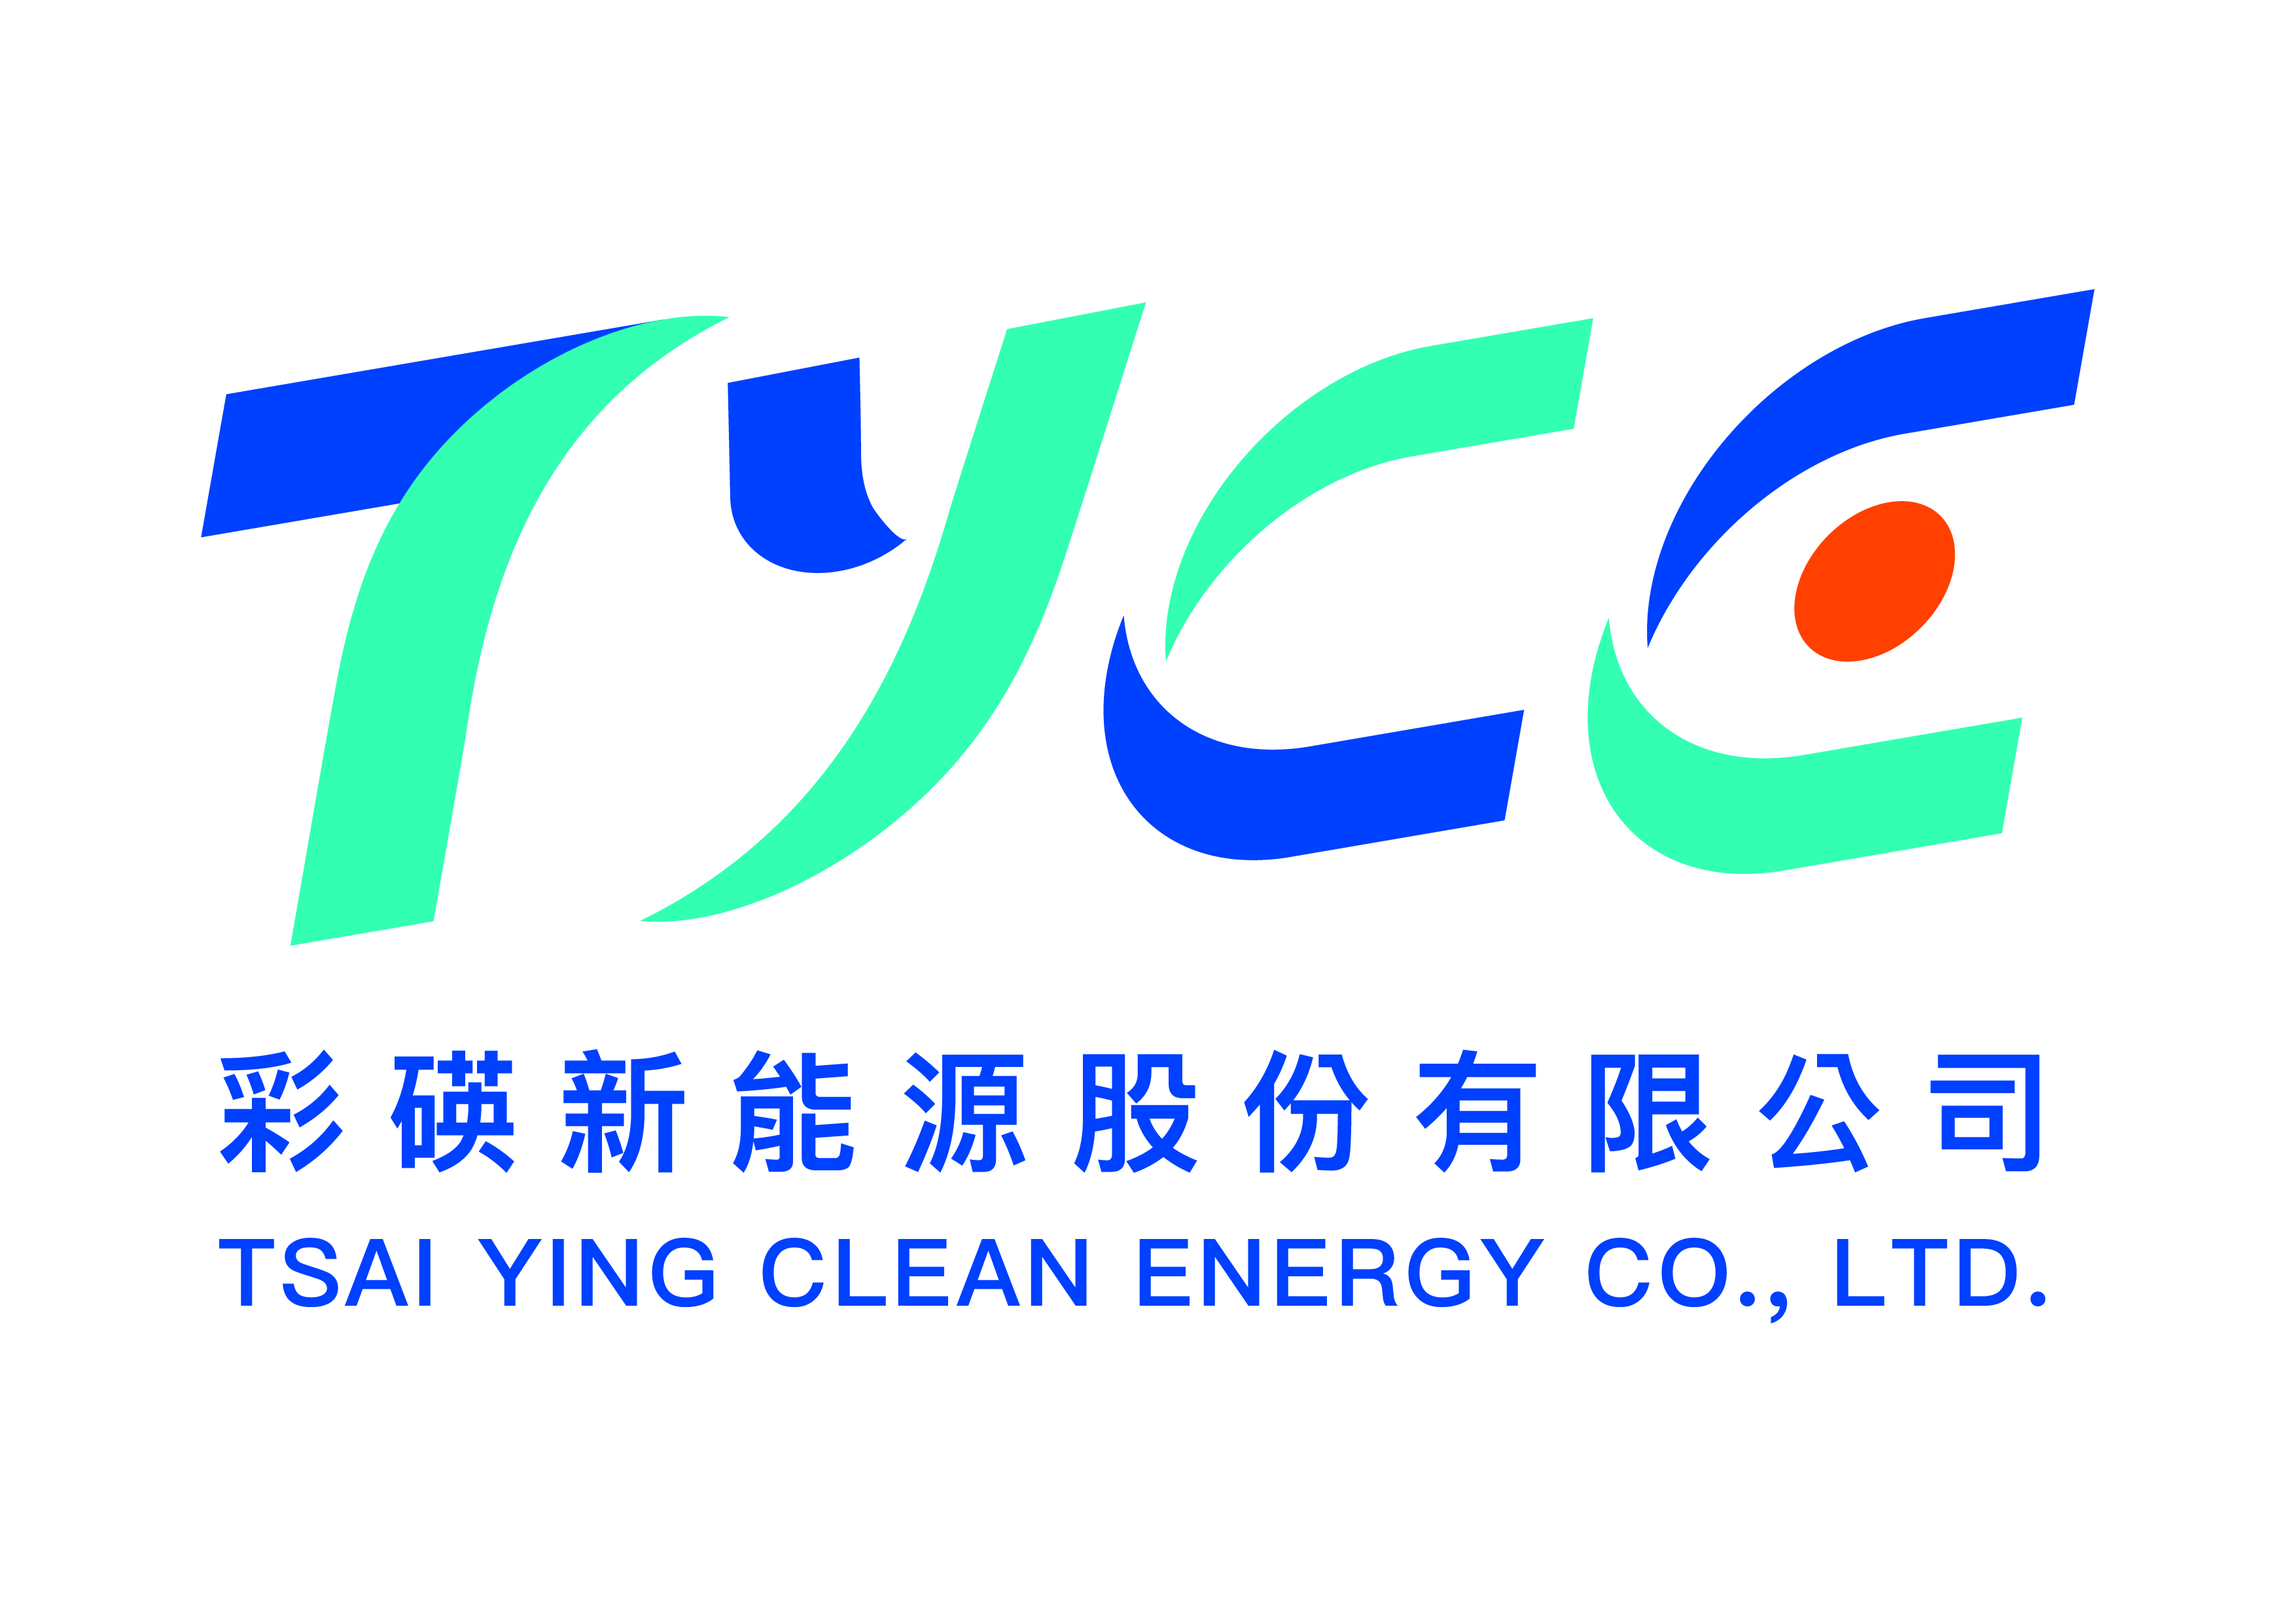 Tsai Ying Clean Energy Co., Ltd.